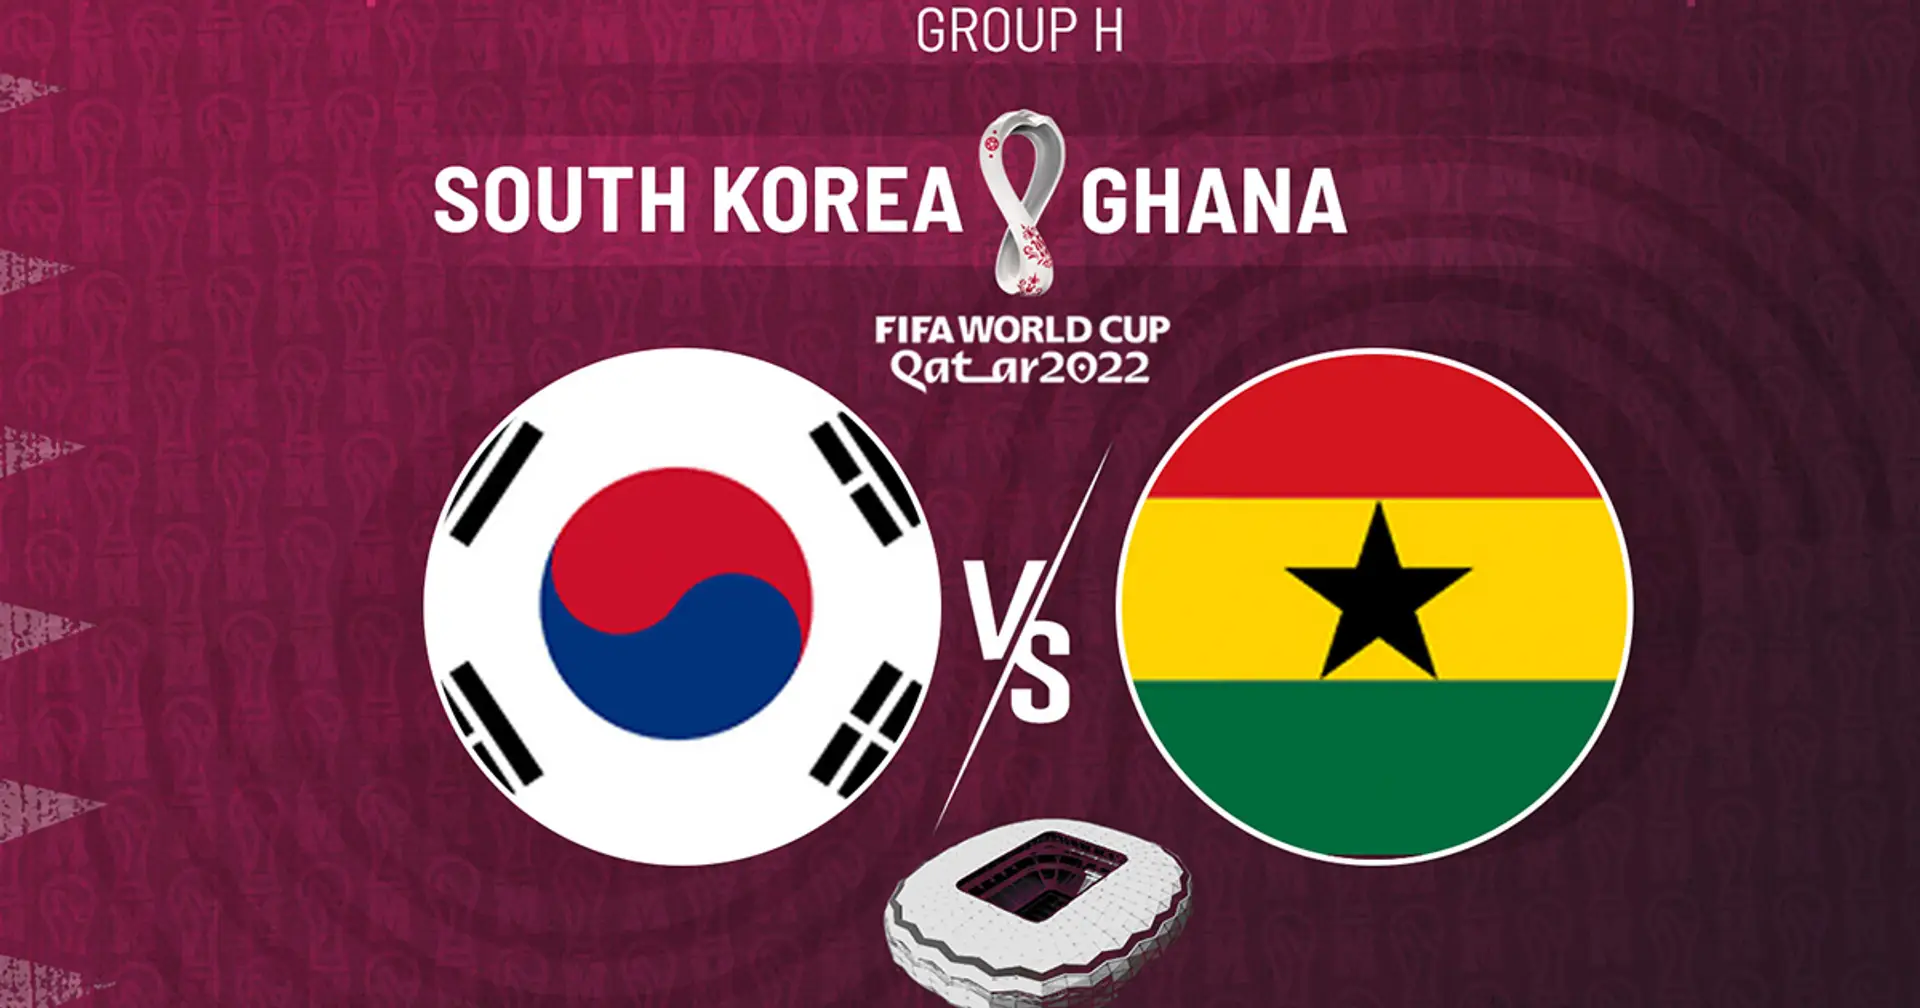 South Korea v Ghana: Official team lineups for the World Cup clash revealed